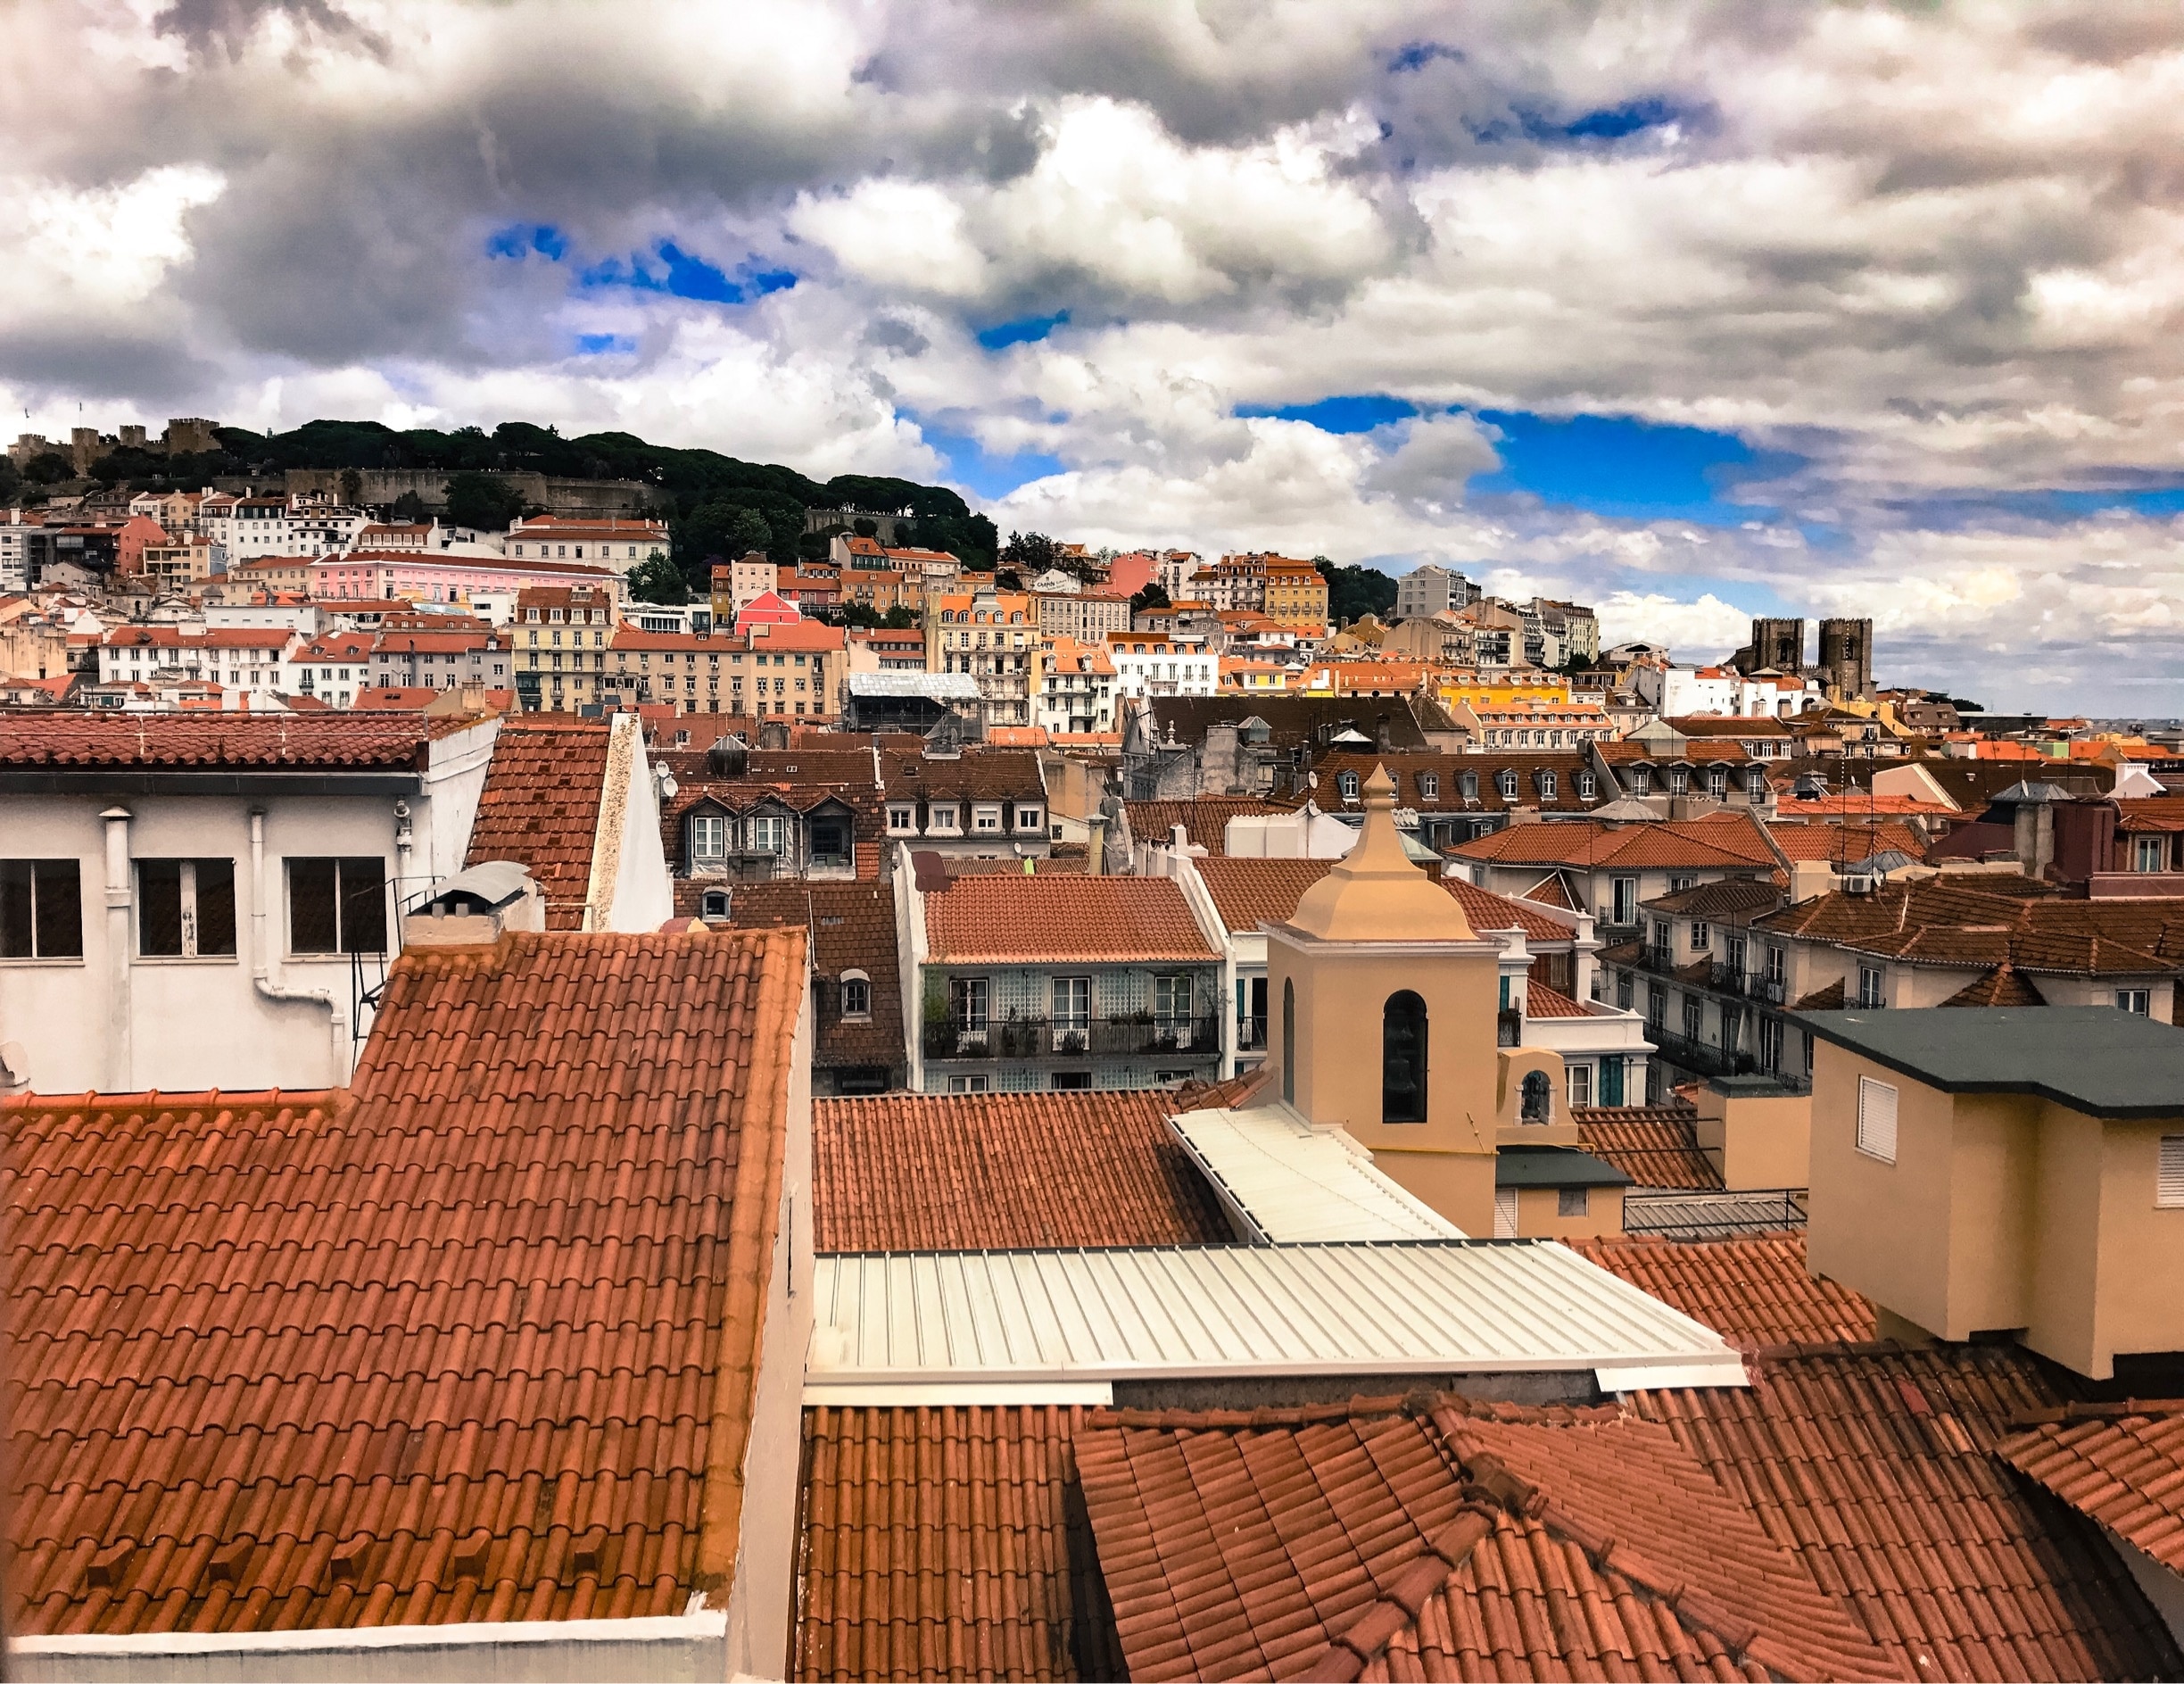 Lisbon has STUNNING VIEWS😍😍
#LifeAtExpedia #views #Portugal